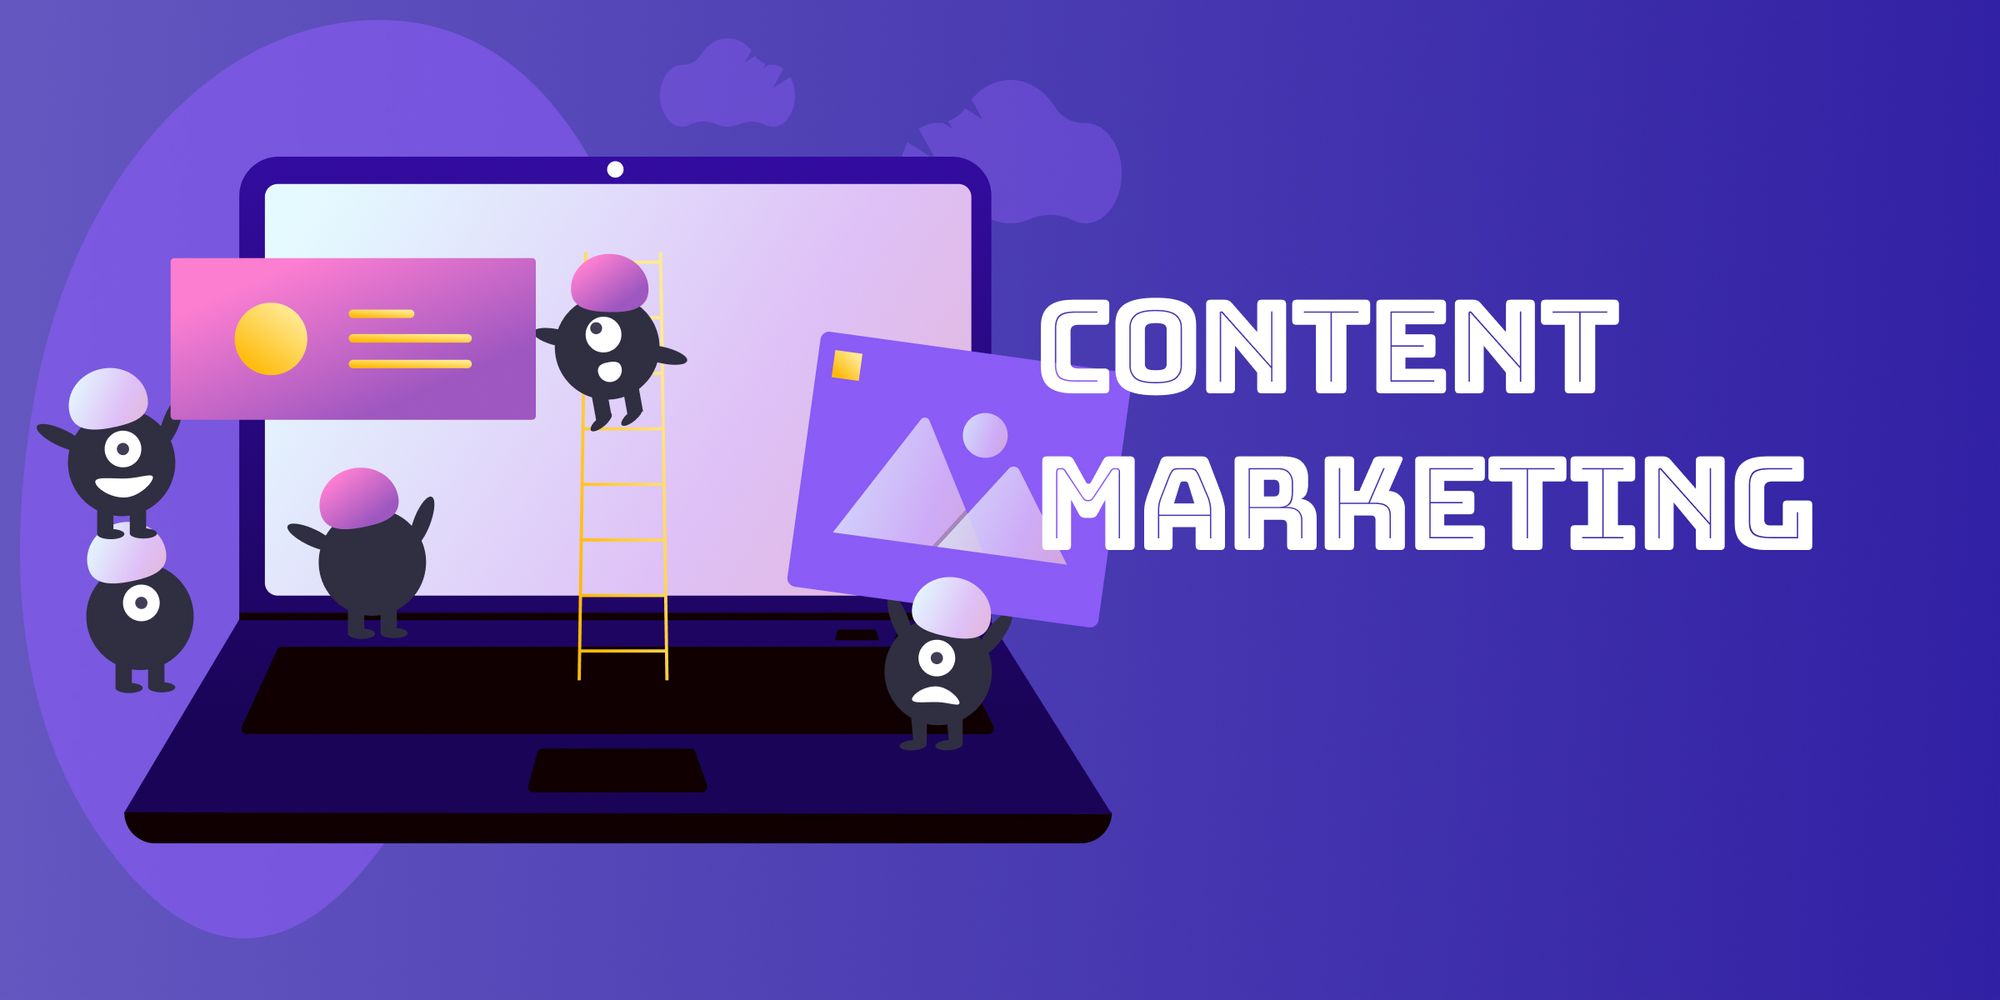 Content-marketing